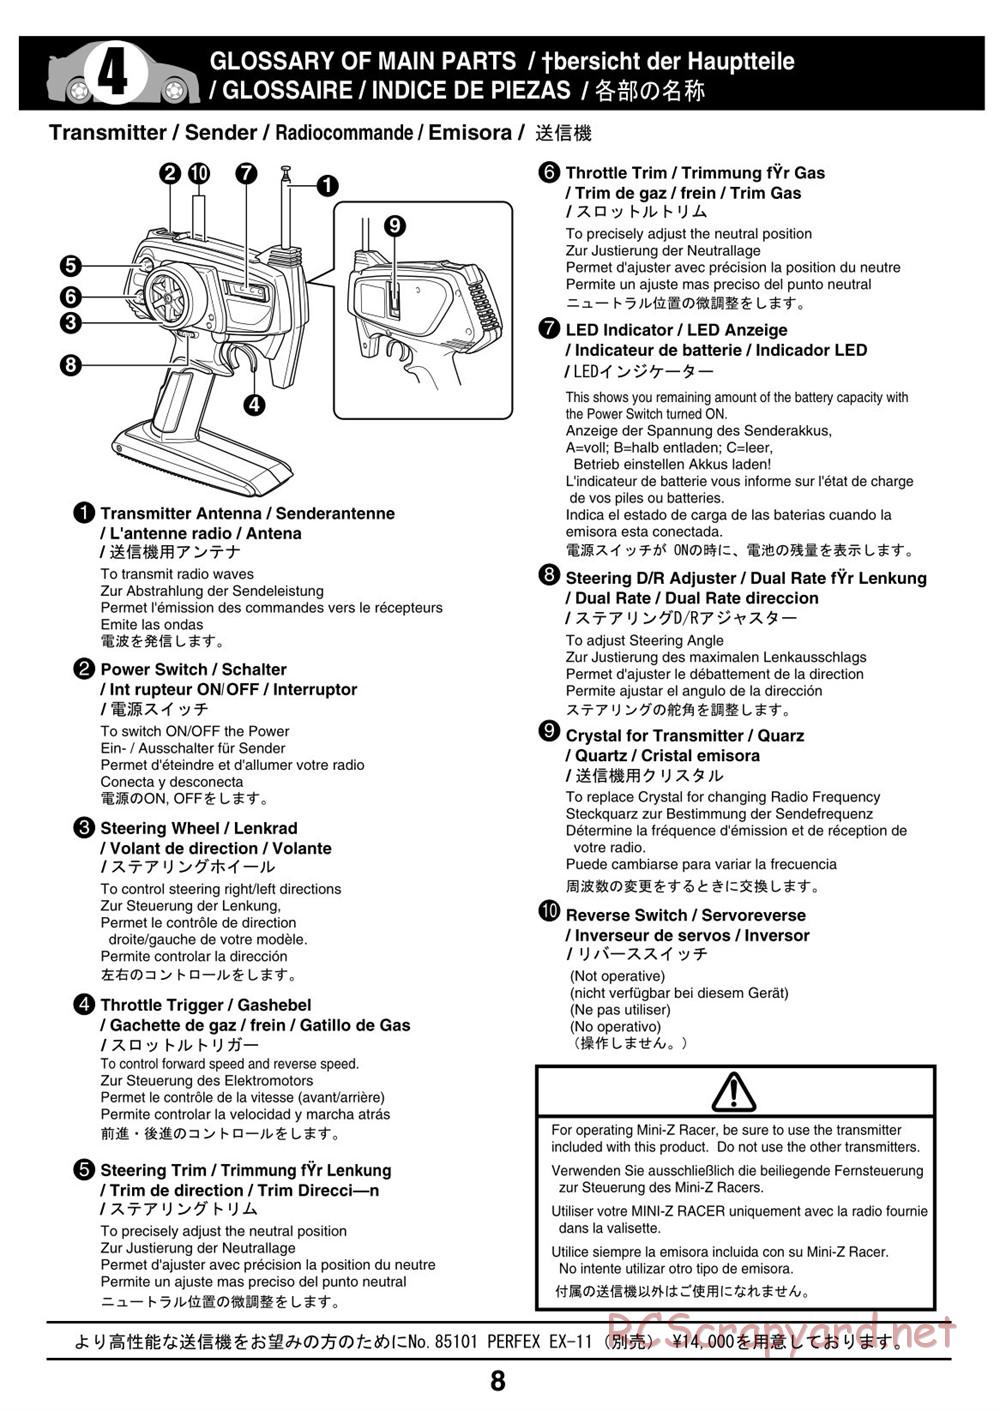 Kyosho - Mini-Z Racer - Manual - Page 8